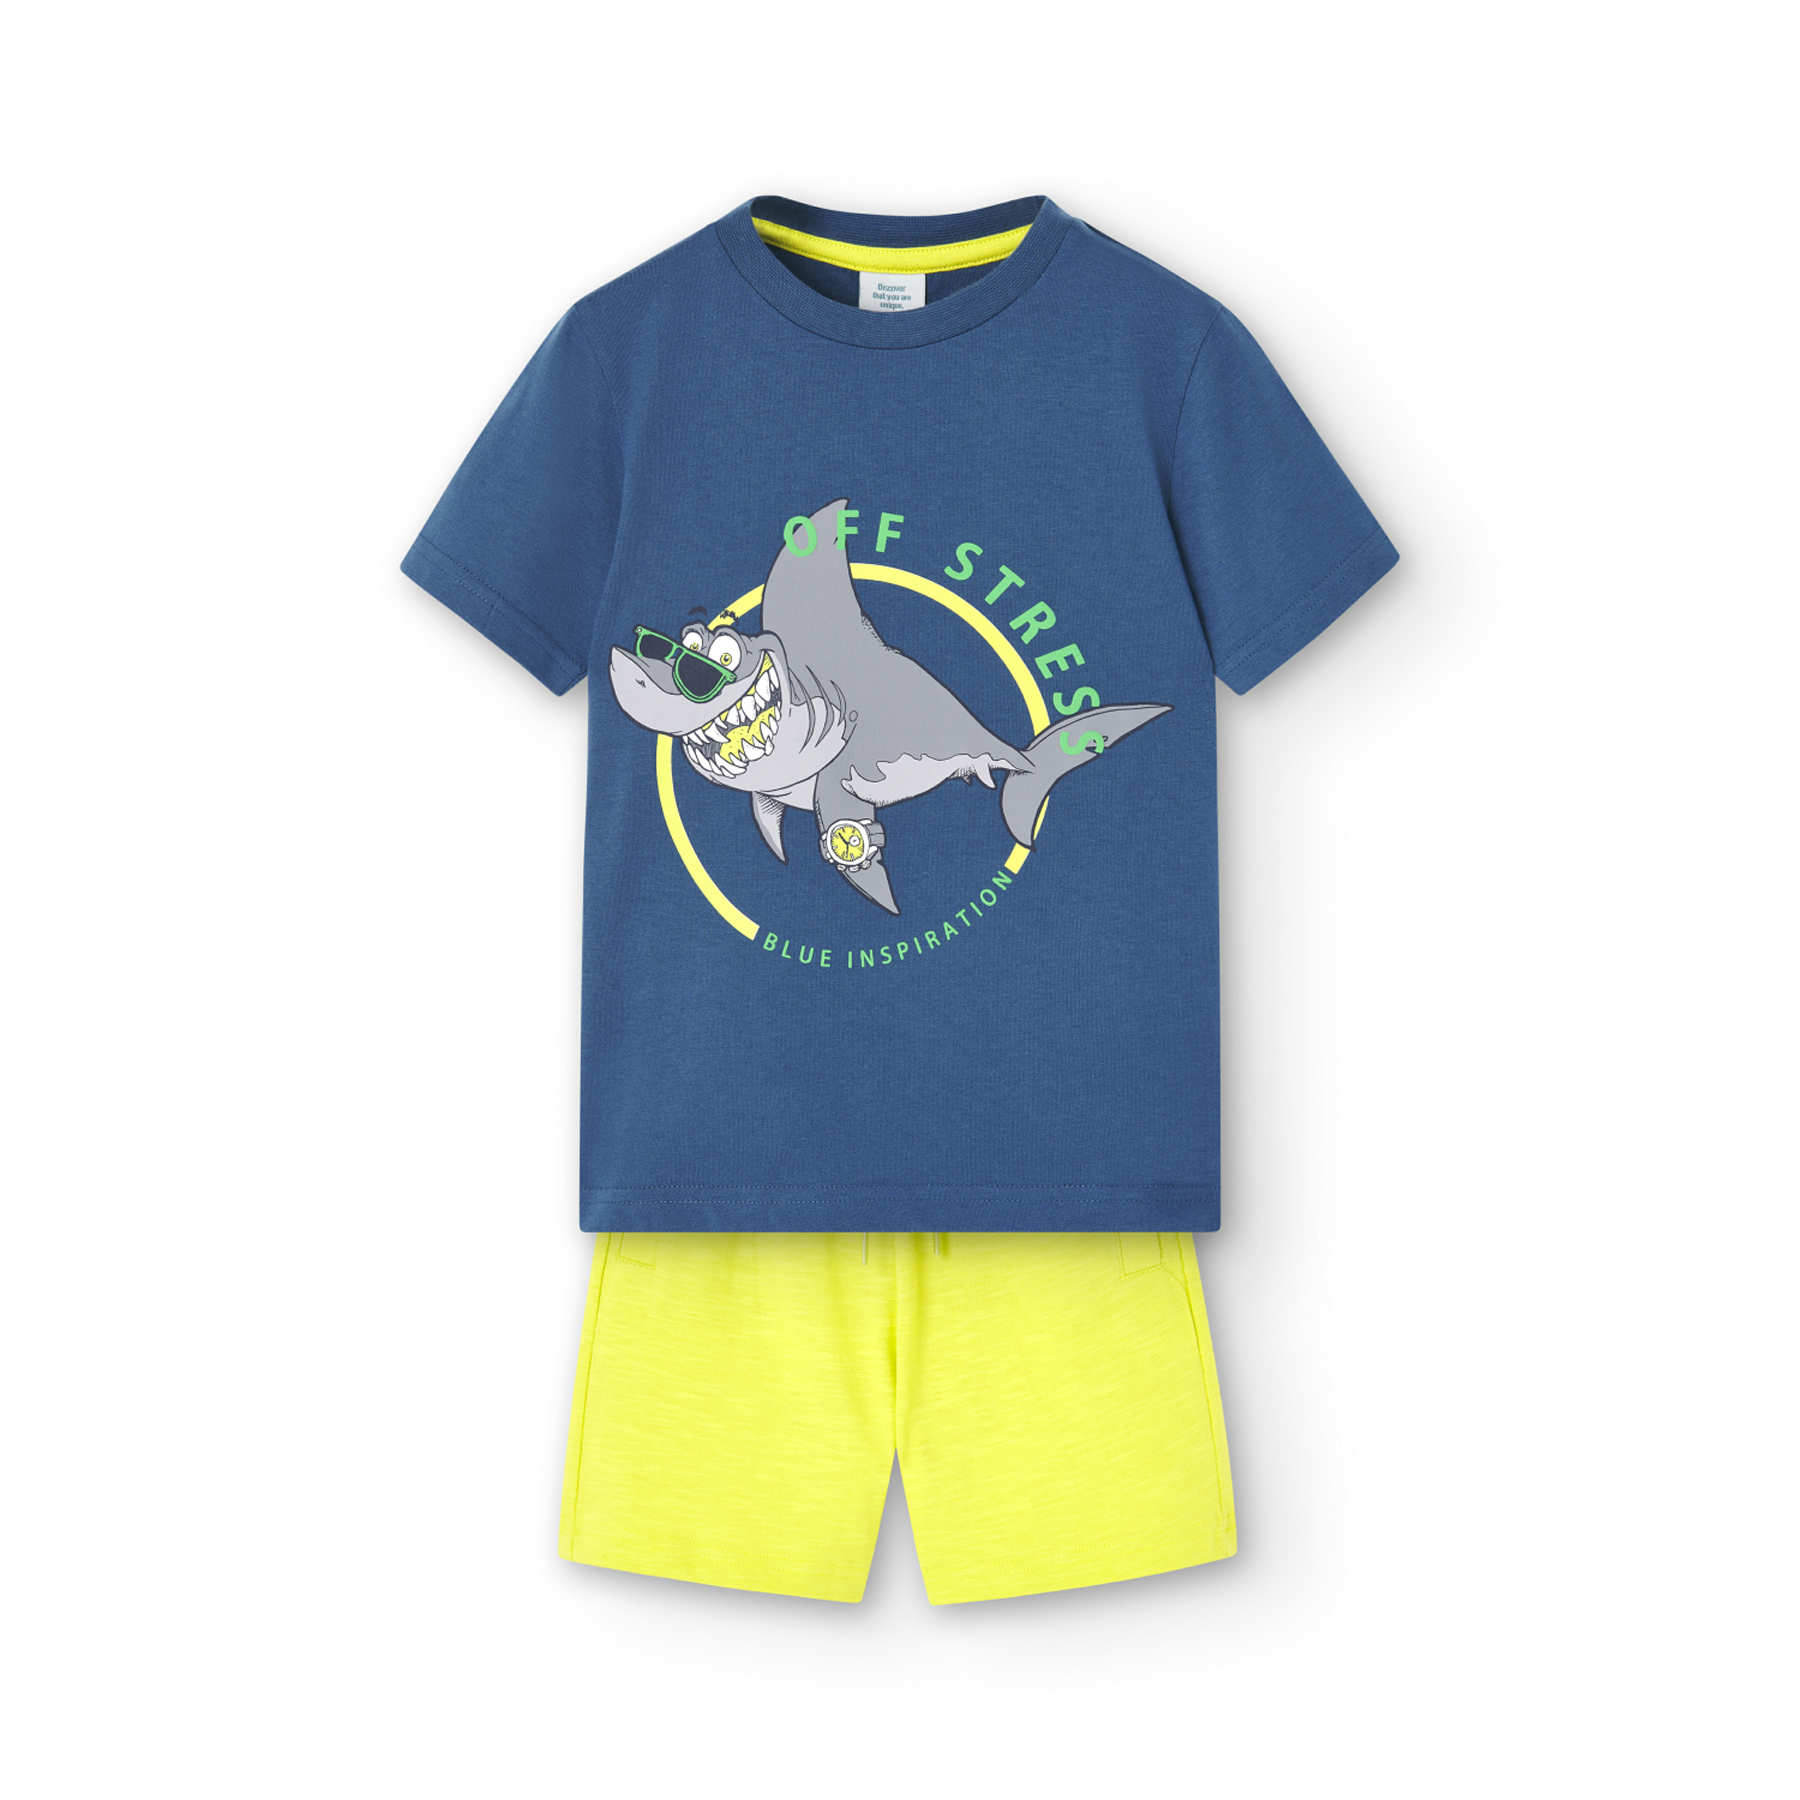 Chlapecká souprava - tričko a šortky BOBOLI